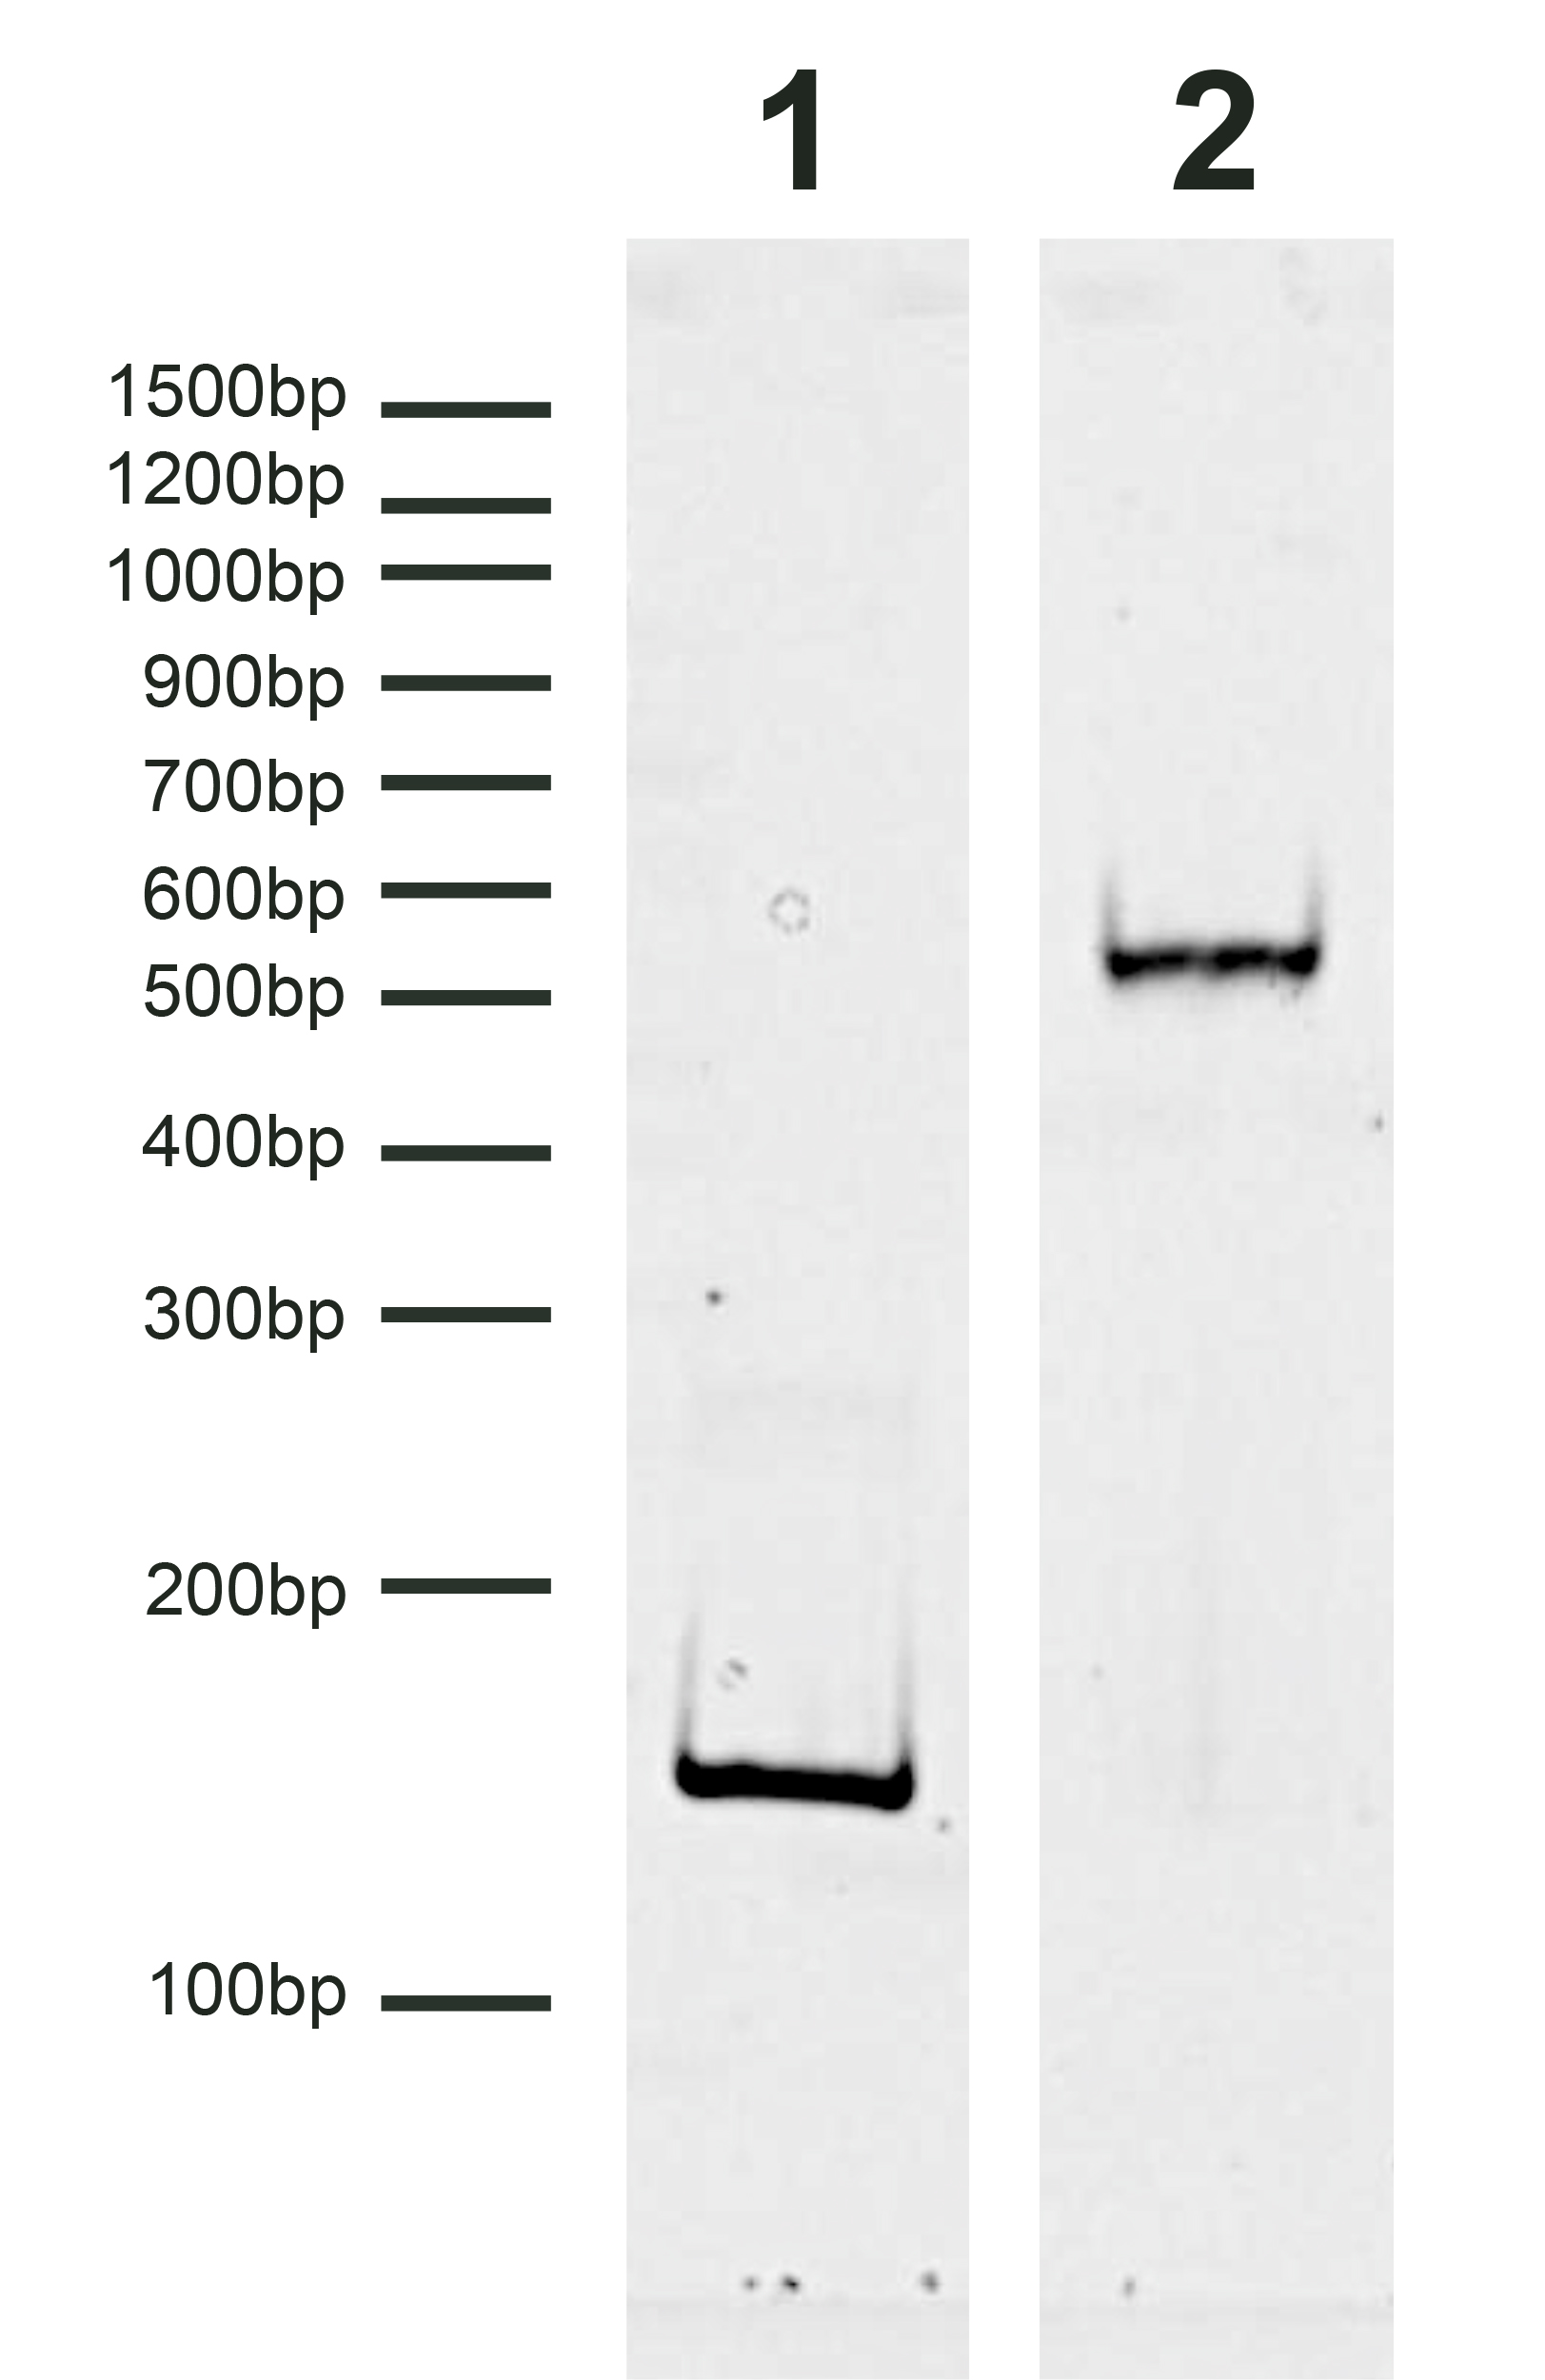 16-0360 DNA Gel Data